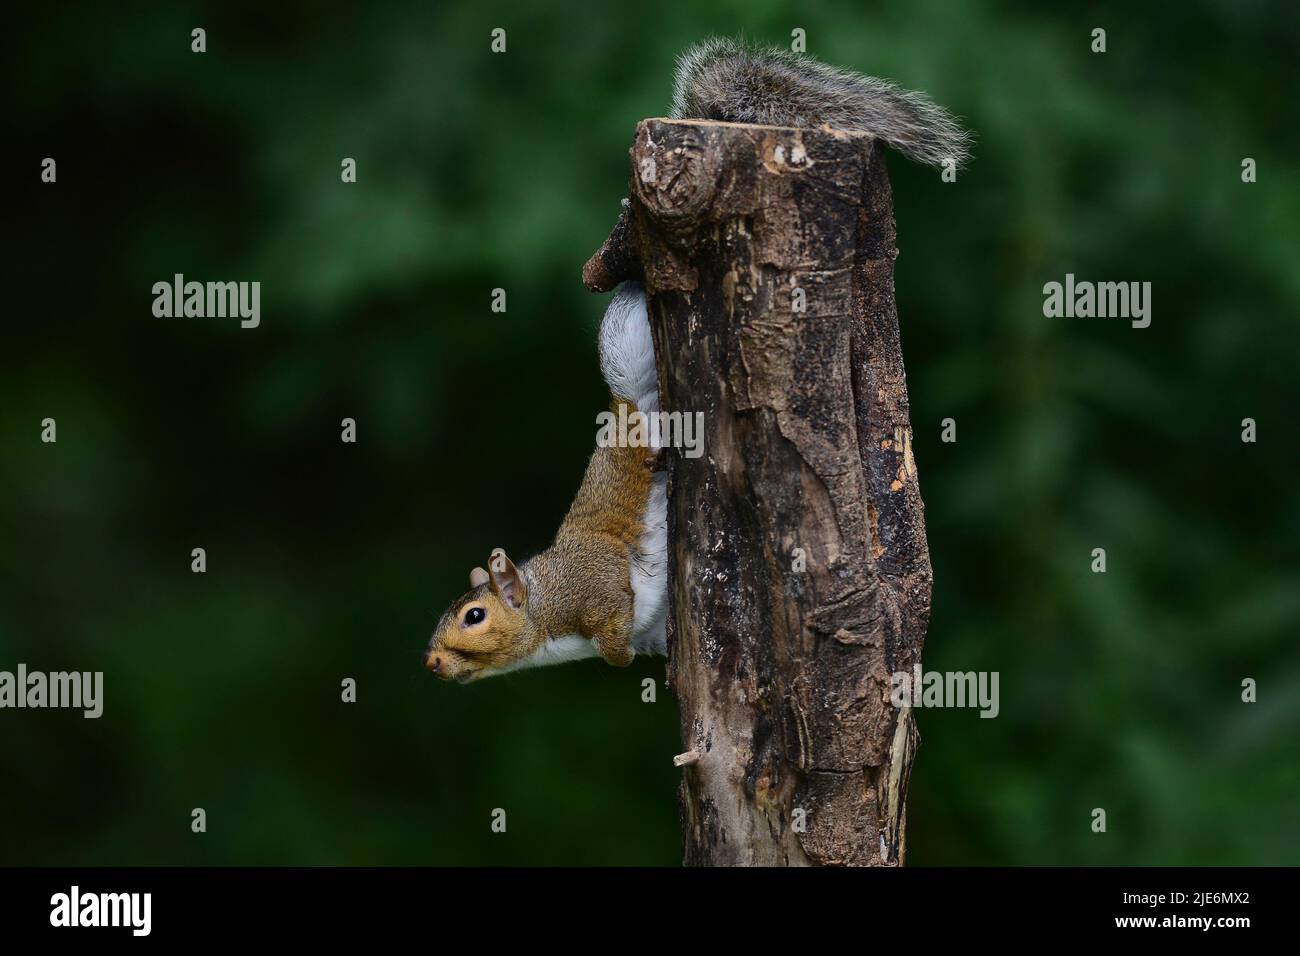 Adult grey squirrel climbing on tree stump Stock Photo